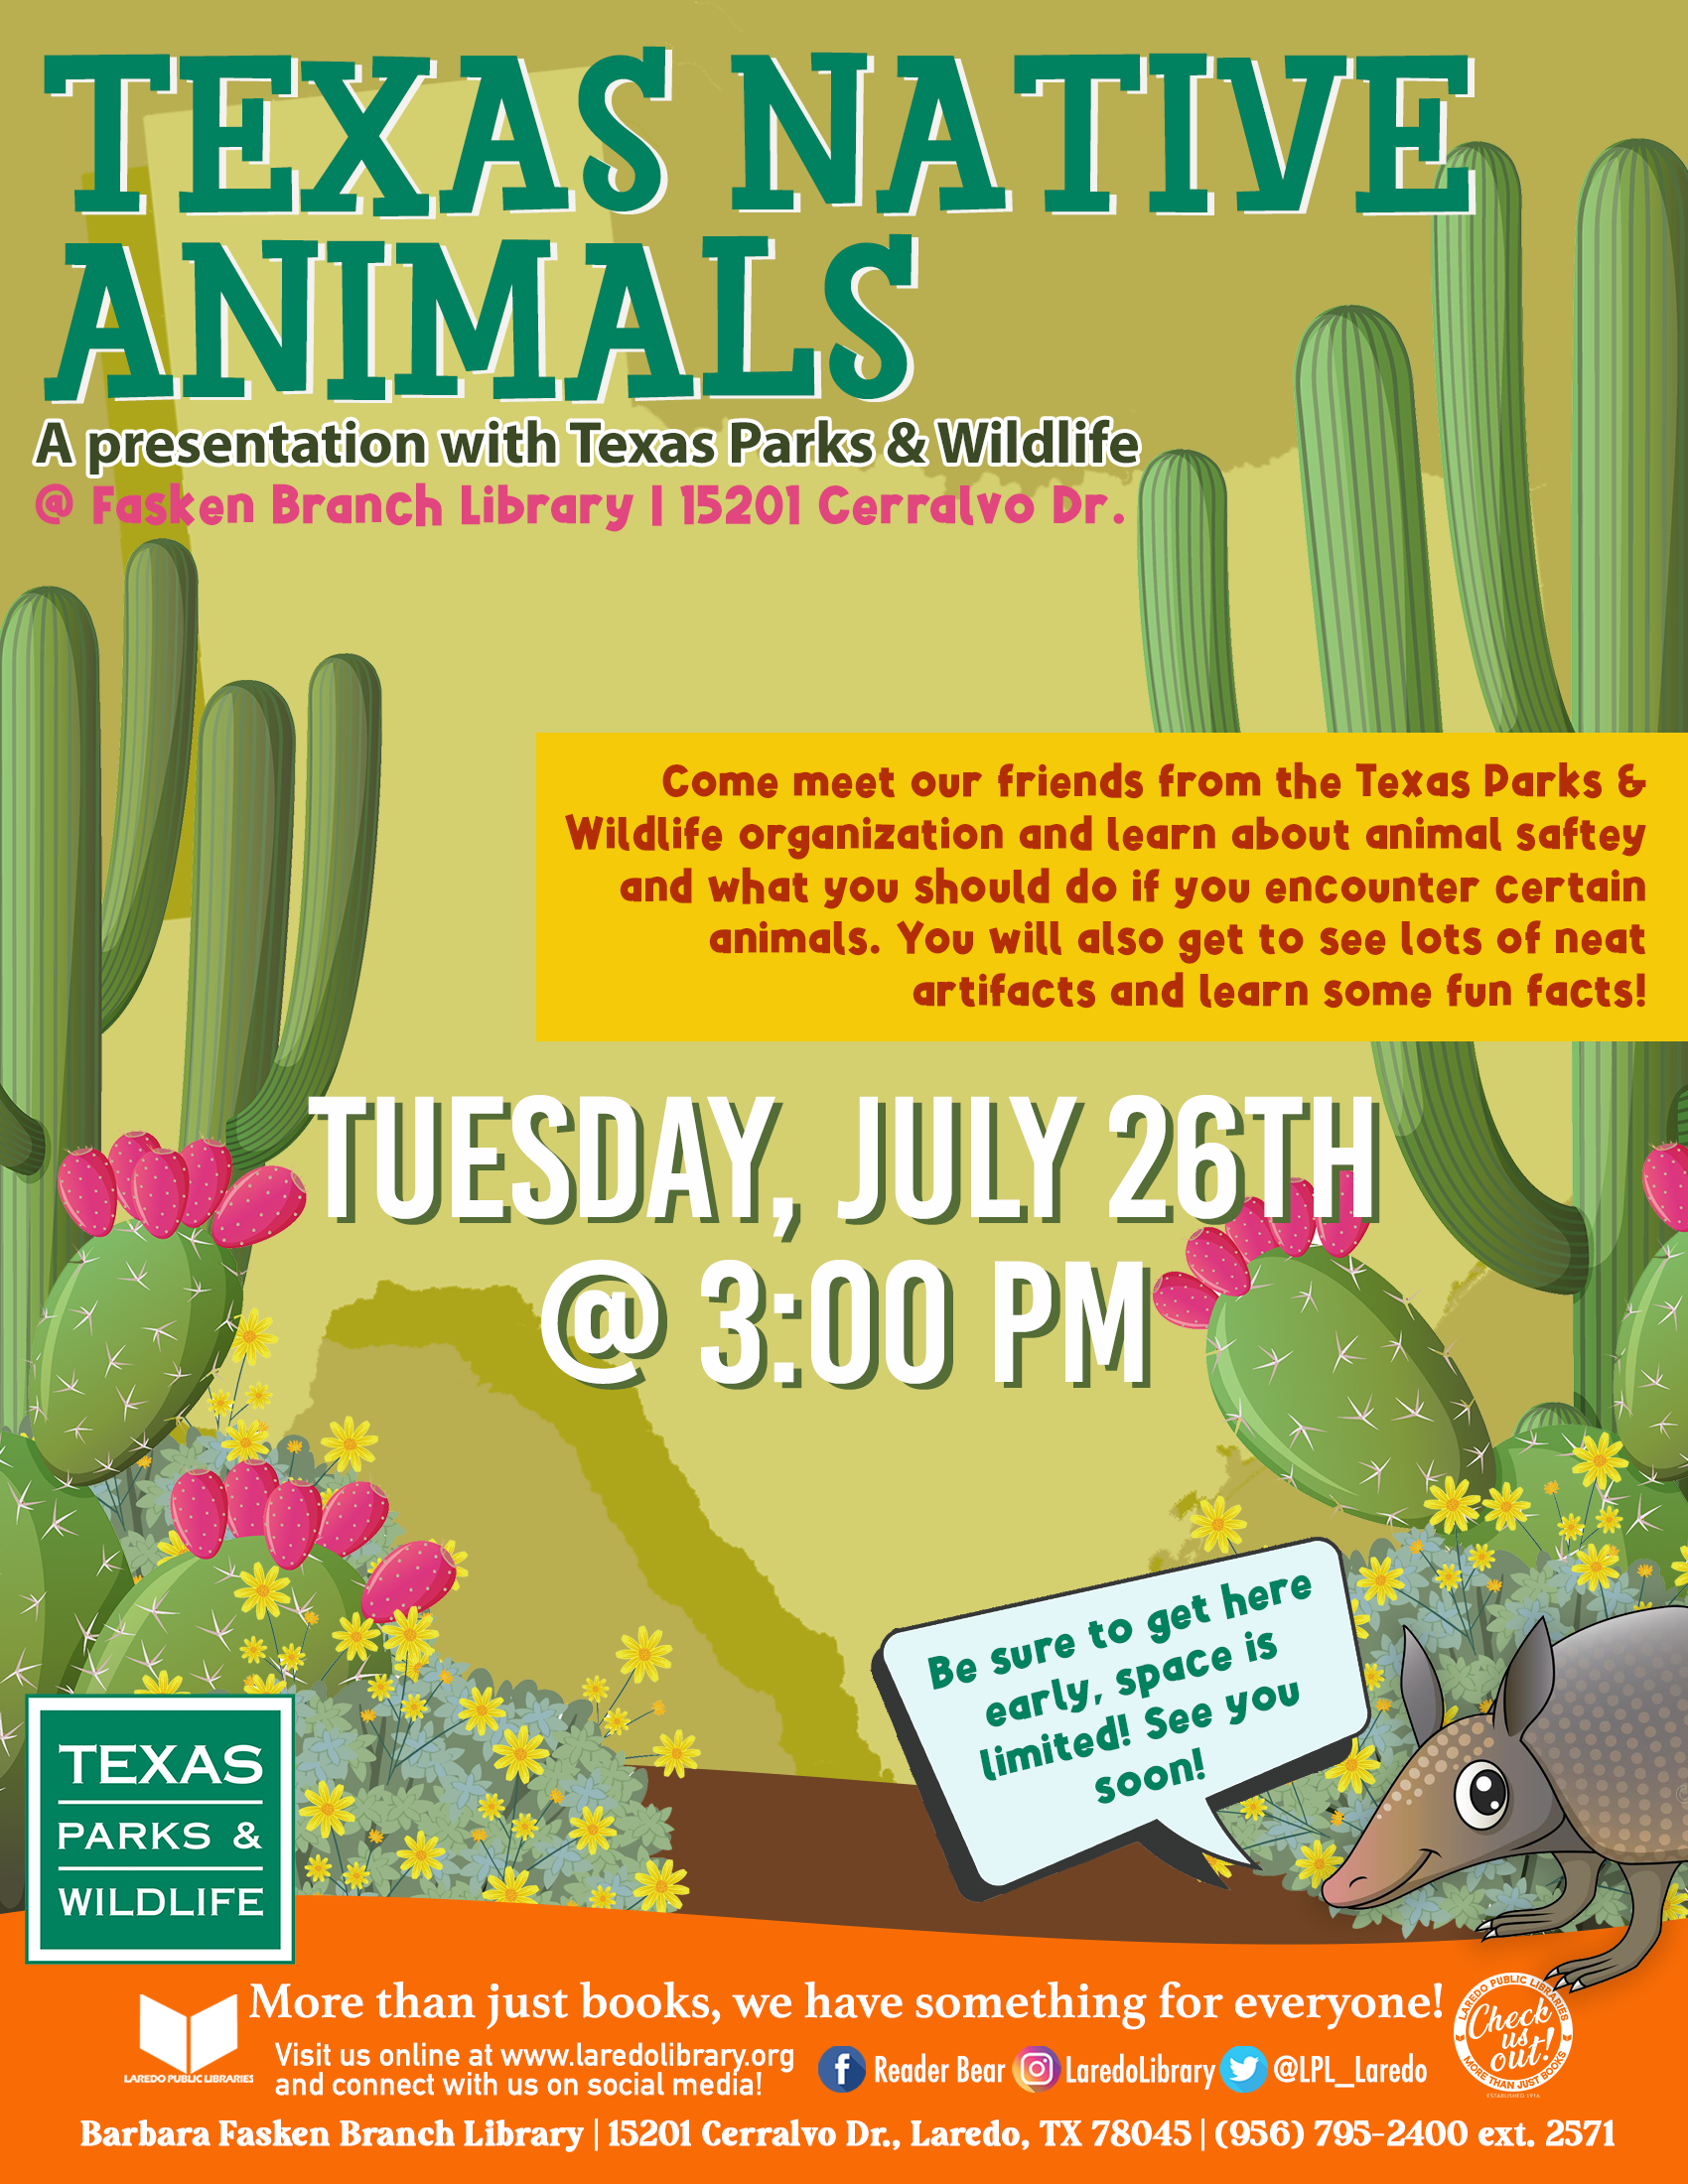 Texas Native Animals A Presentation with Texas Parks & Wildlife